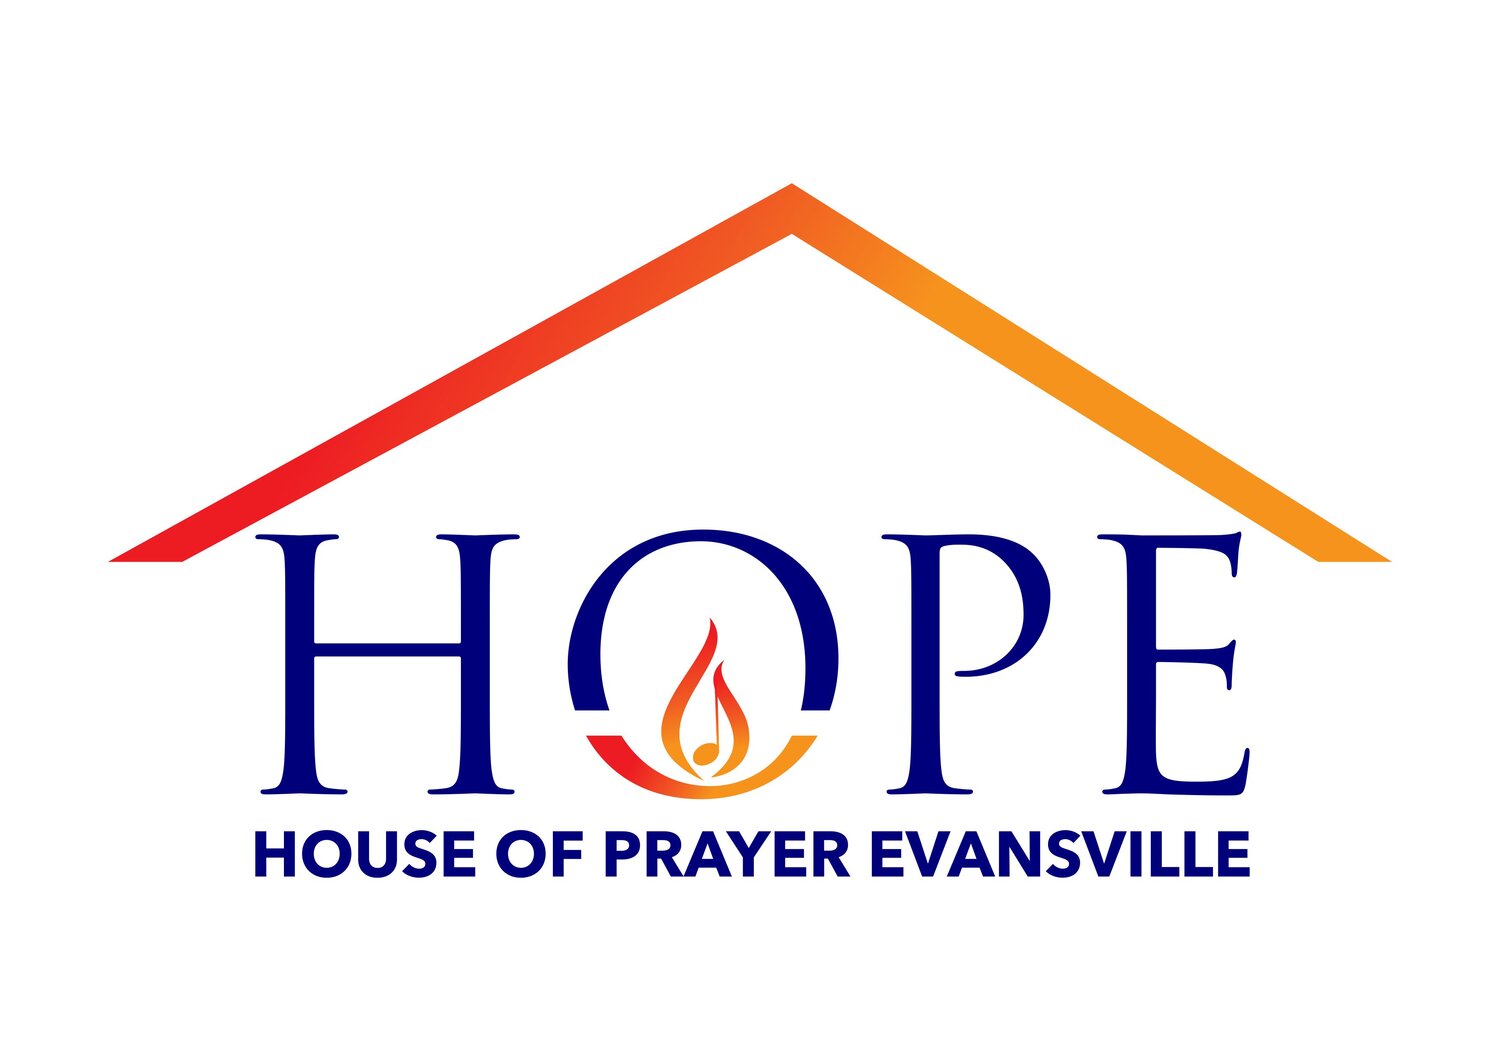 House of Prayer Evansville